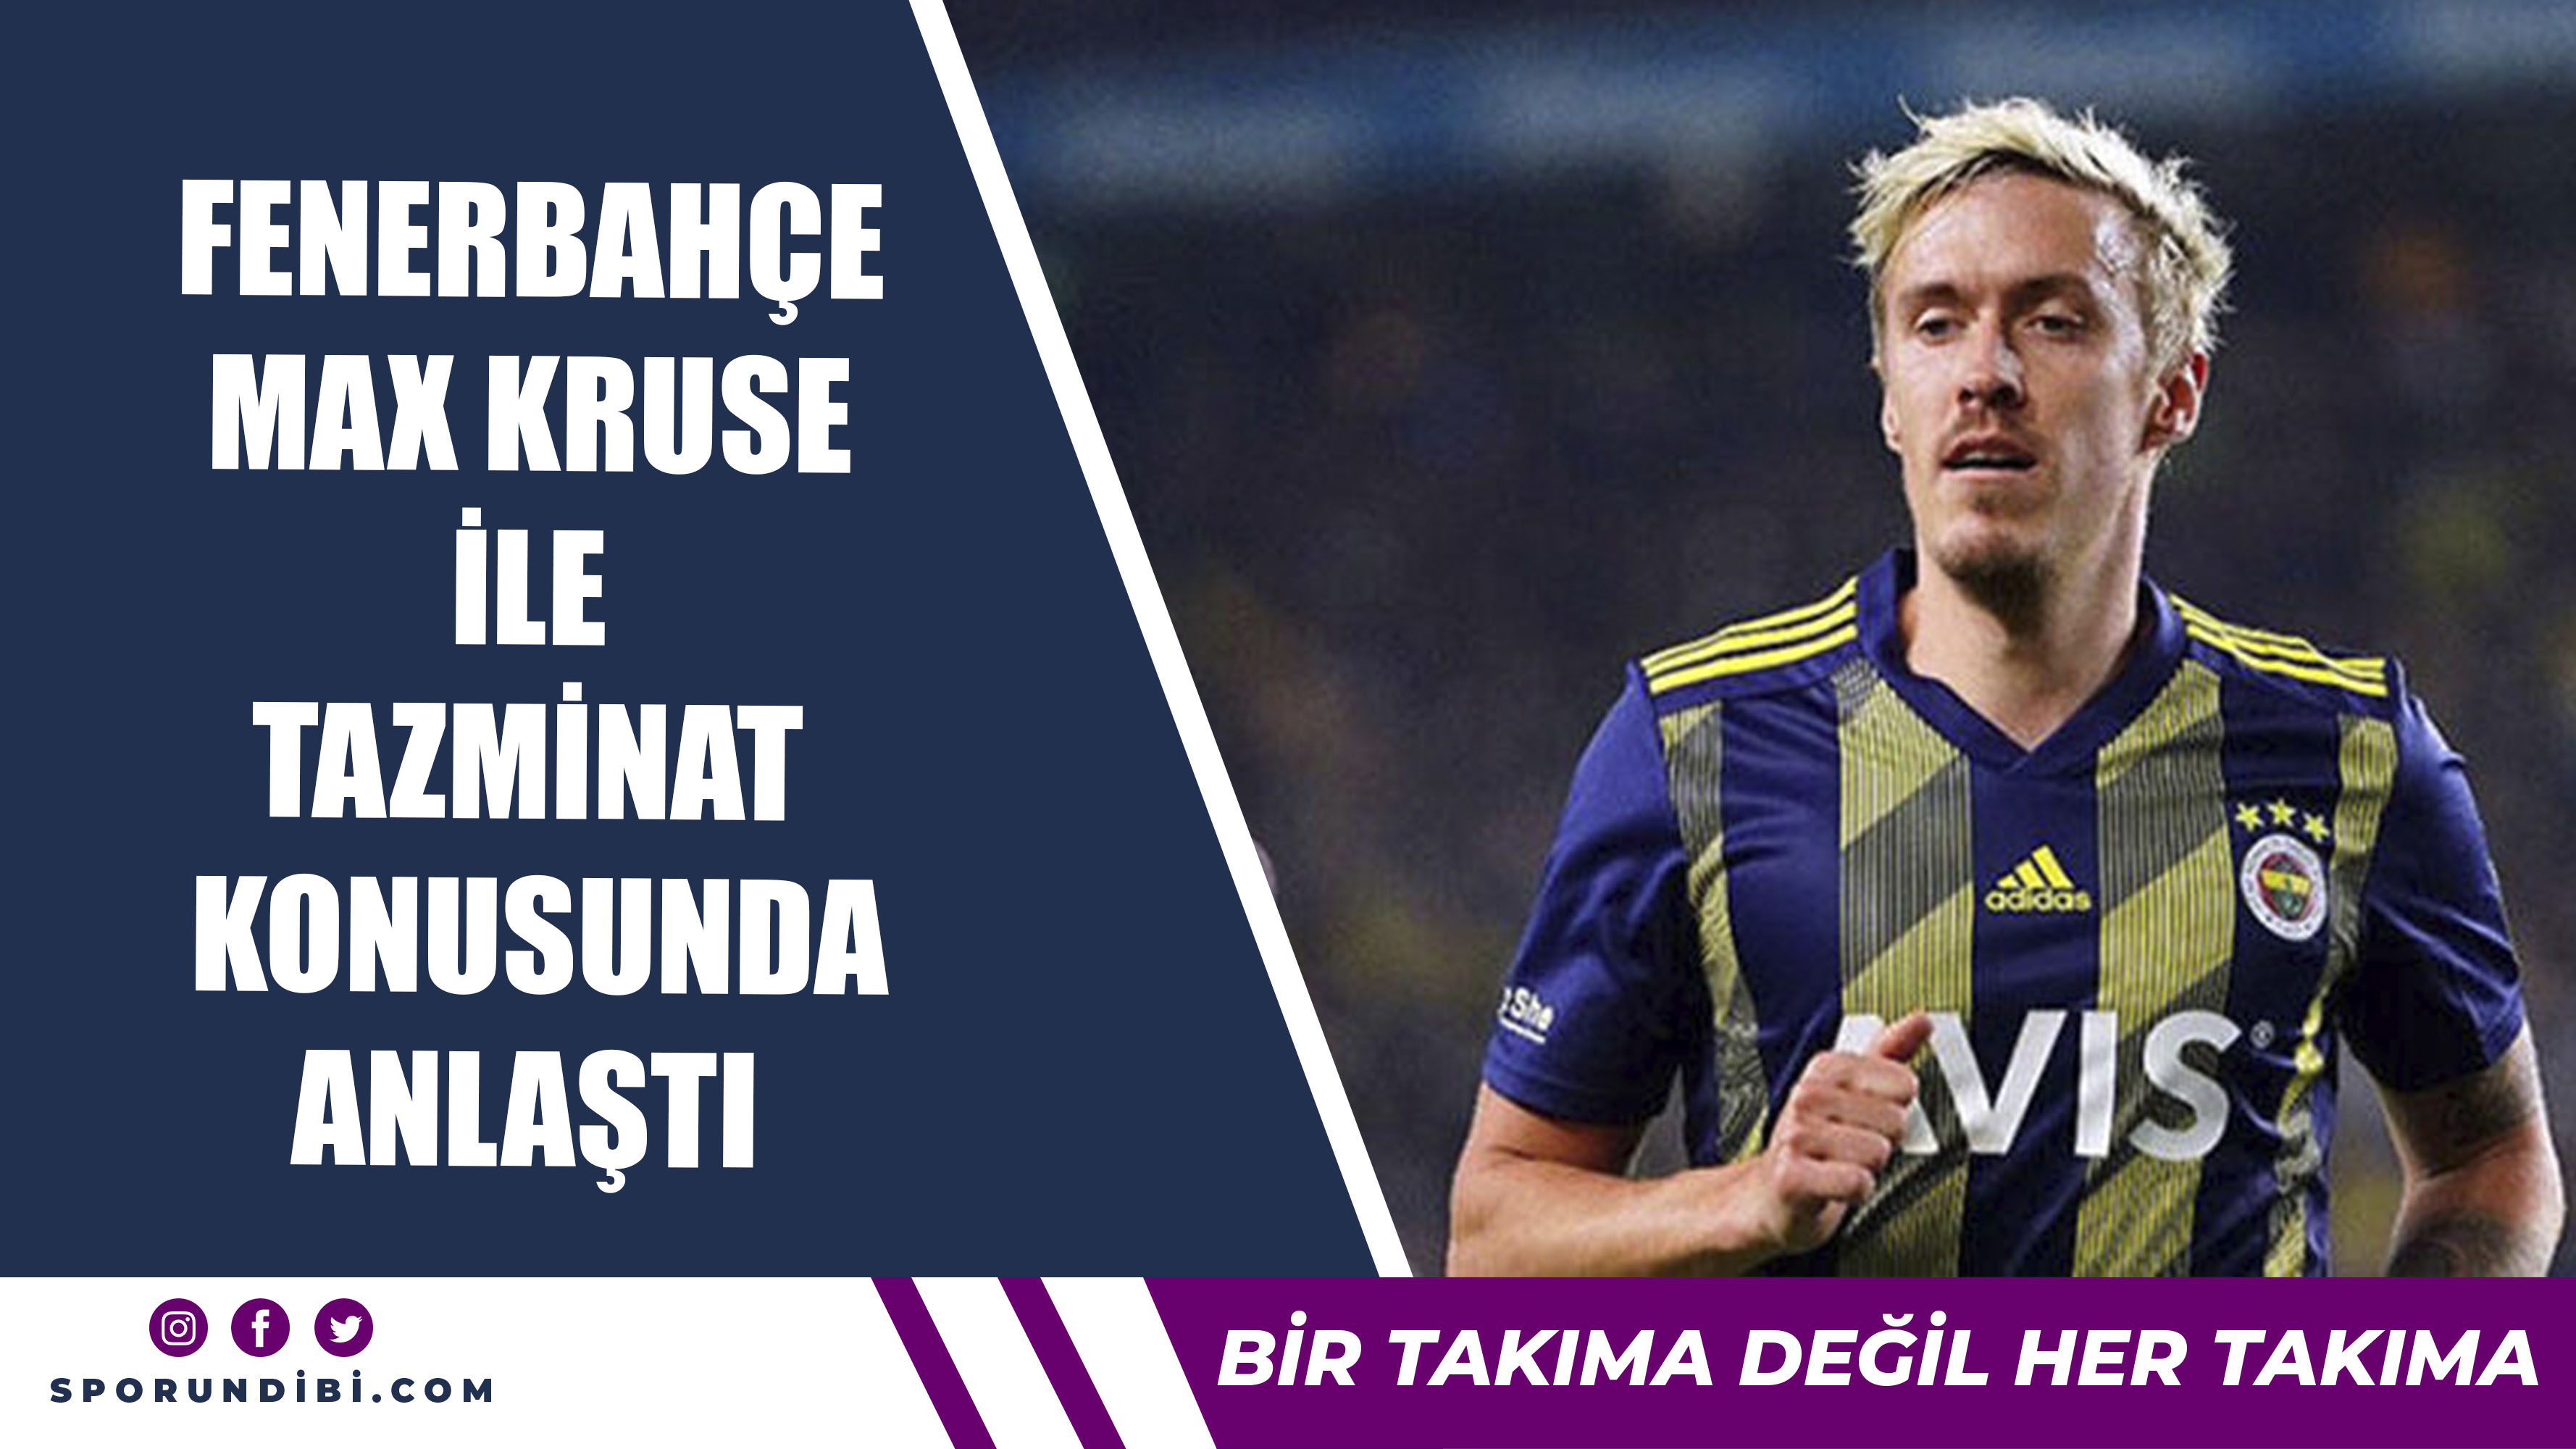 Fenerbahçe Max Kruse ile Tazminat Konusunda Anlaştı